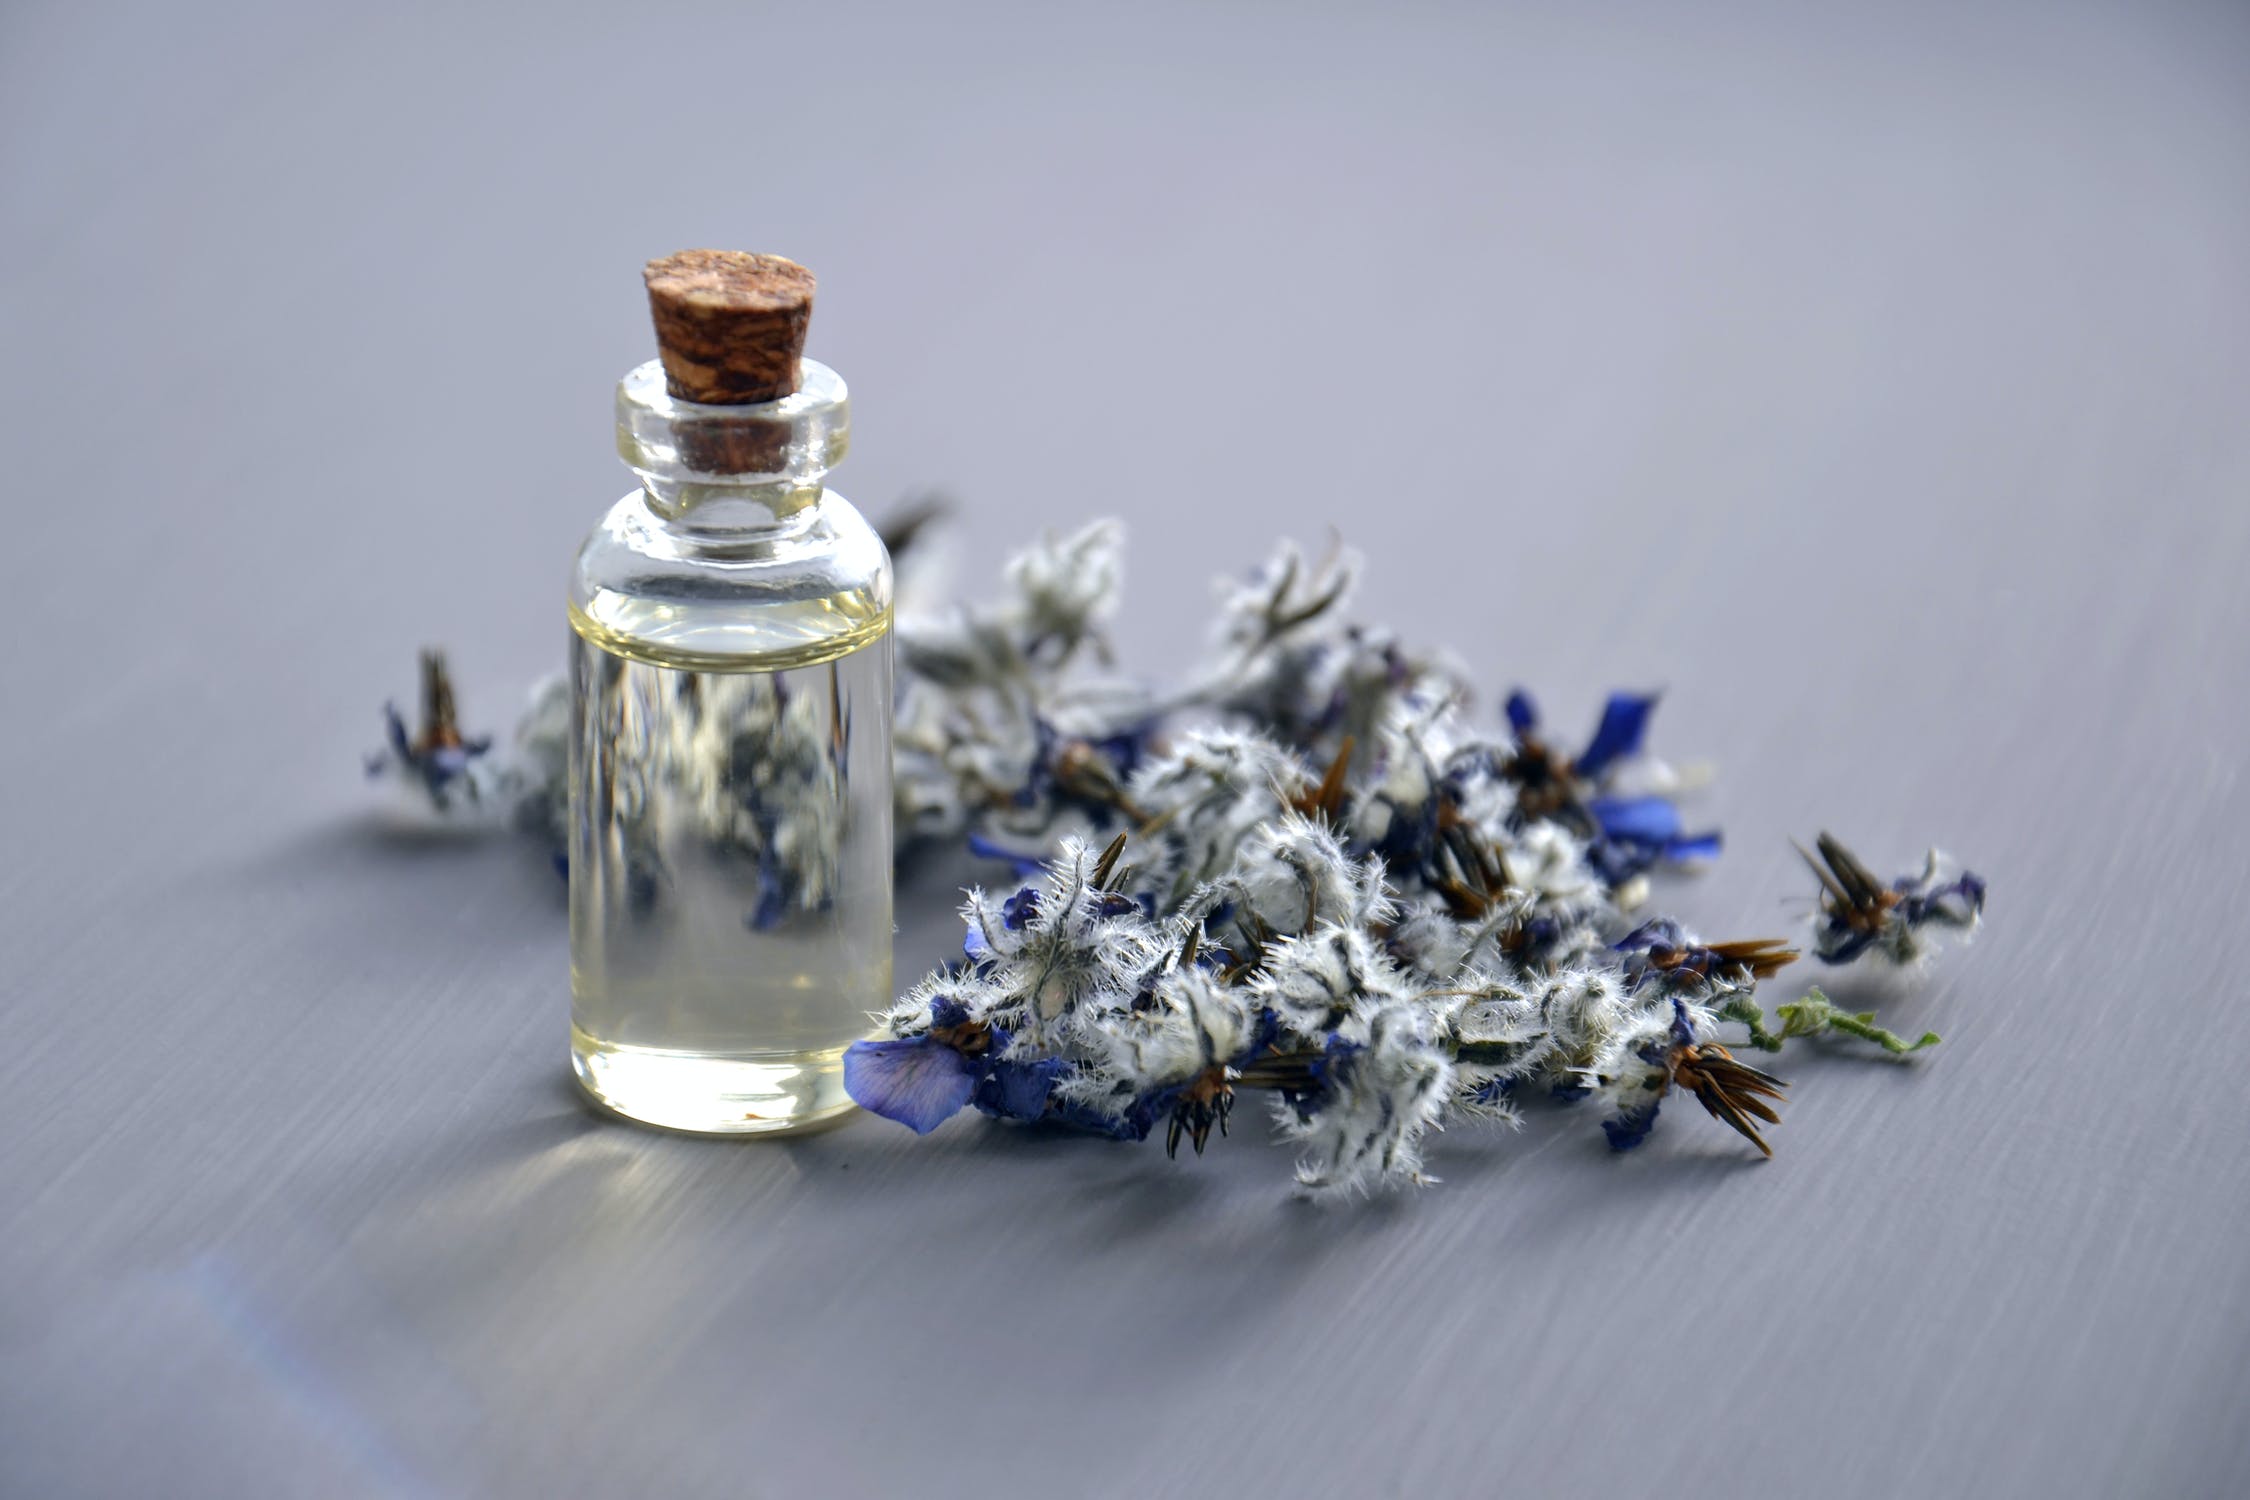 Tips & Tricks Tuesday: Magic of Aromatherapy